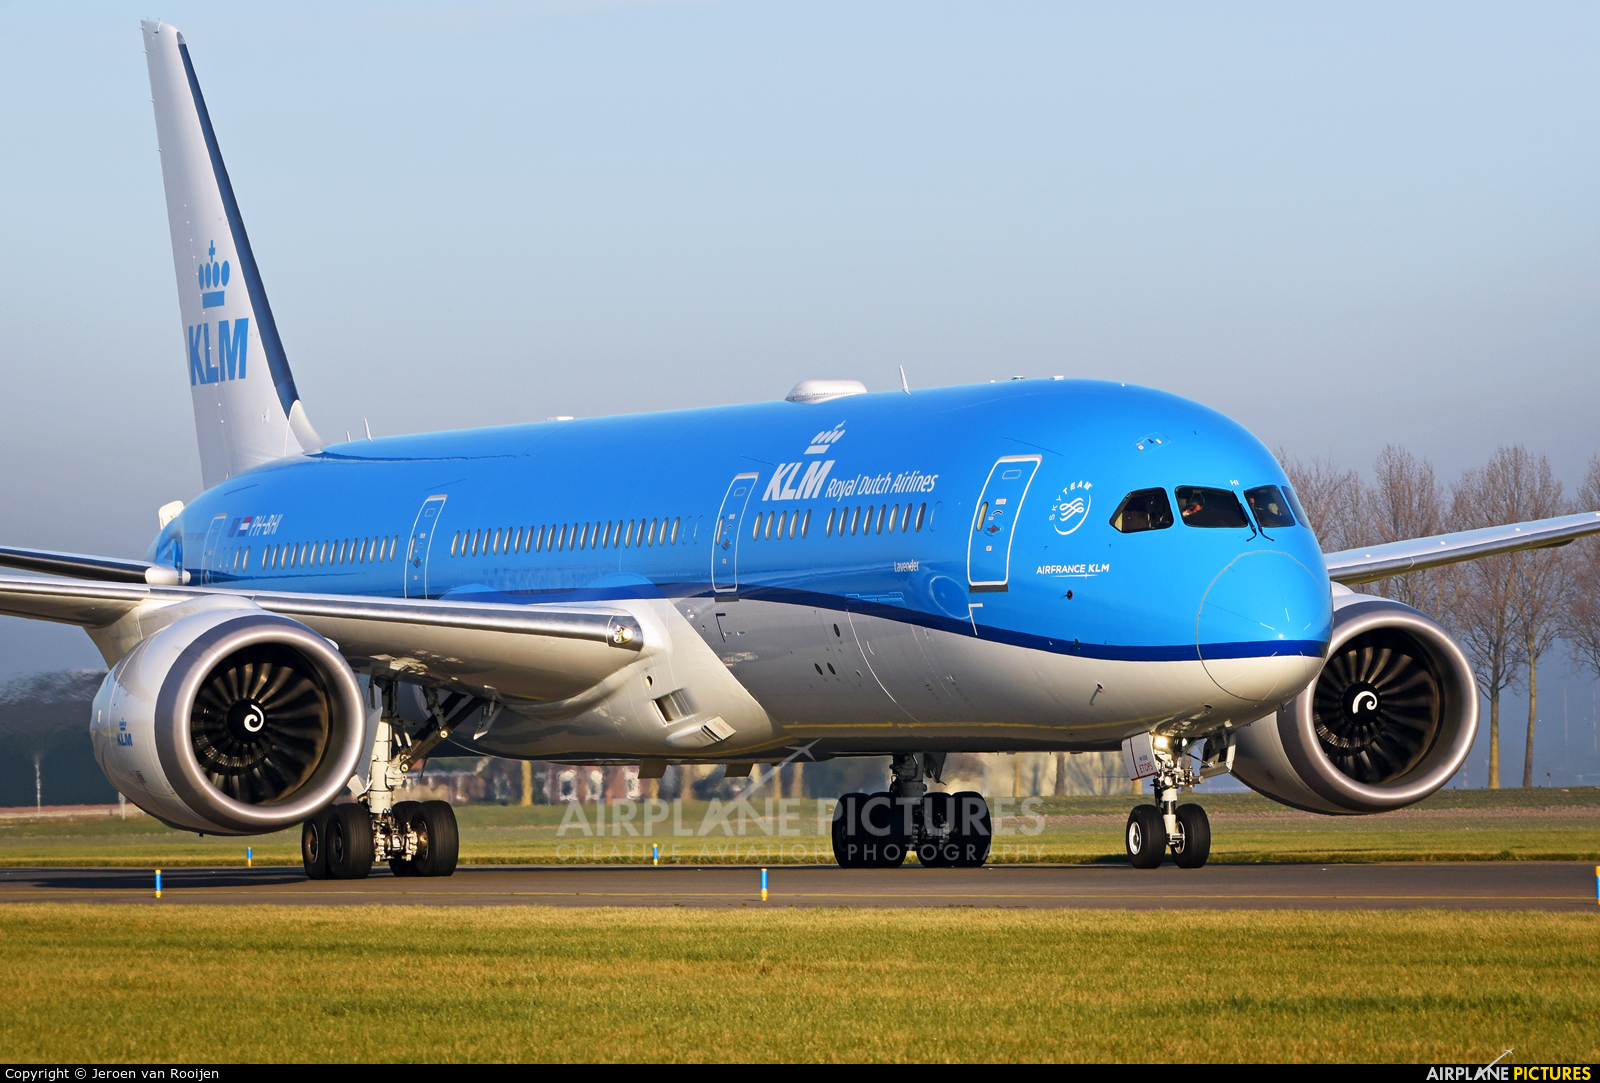 KLM PH-BHI aircraft at Amsterdam - Schiphol